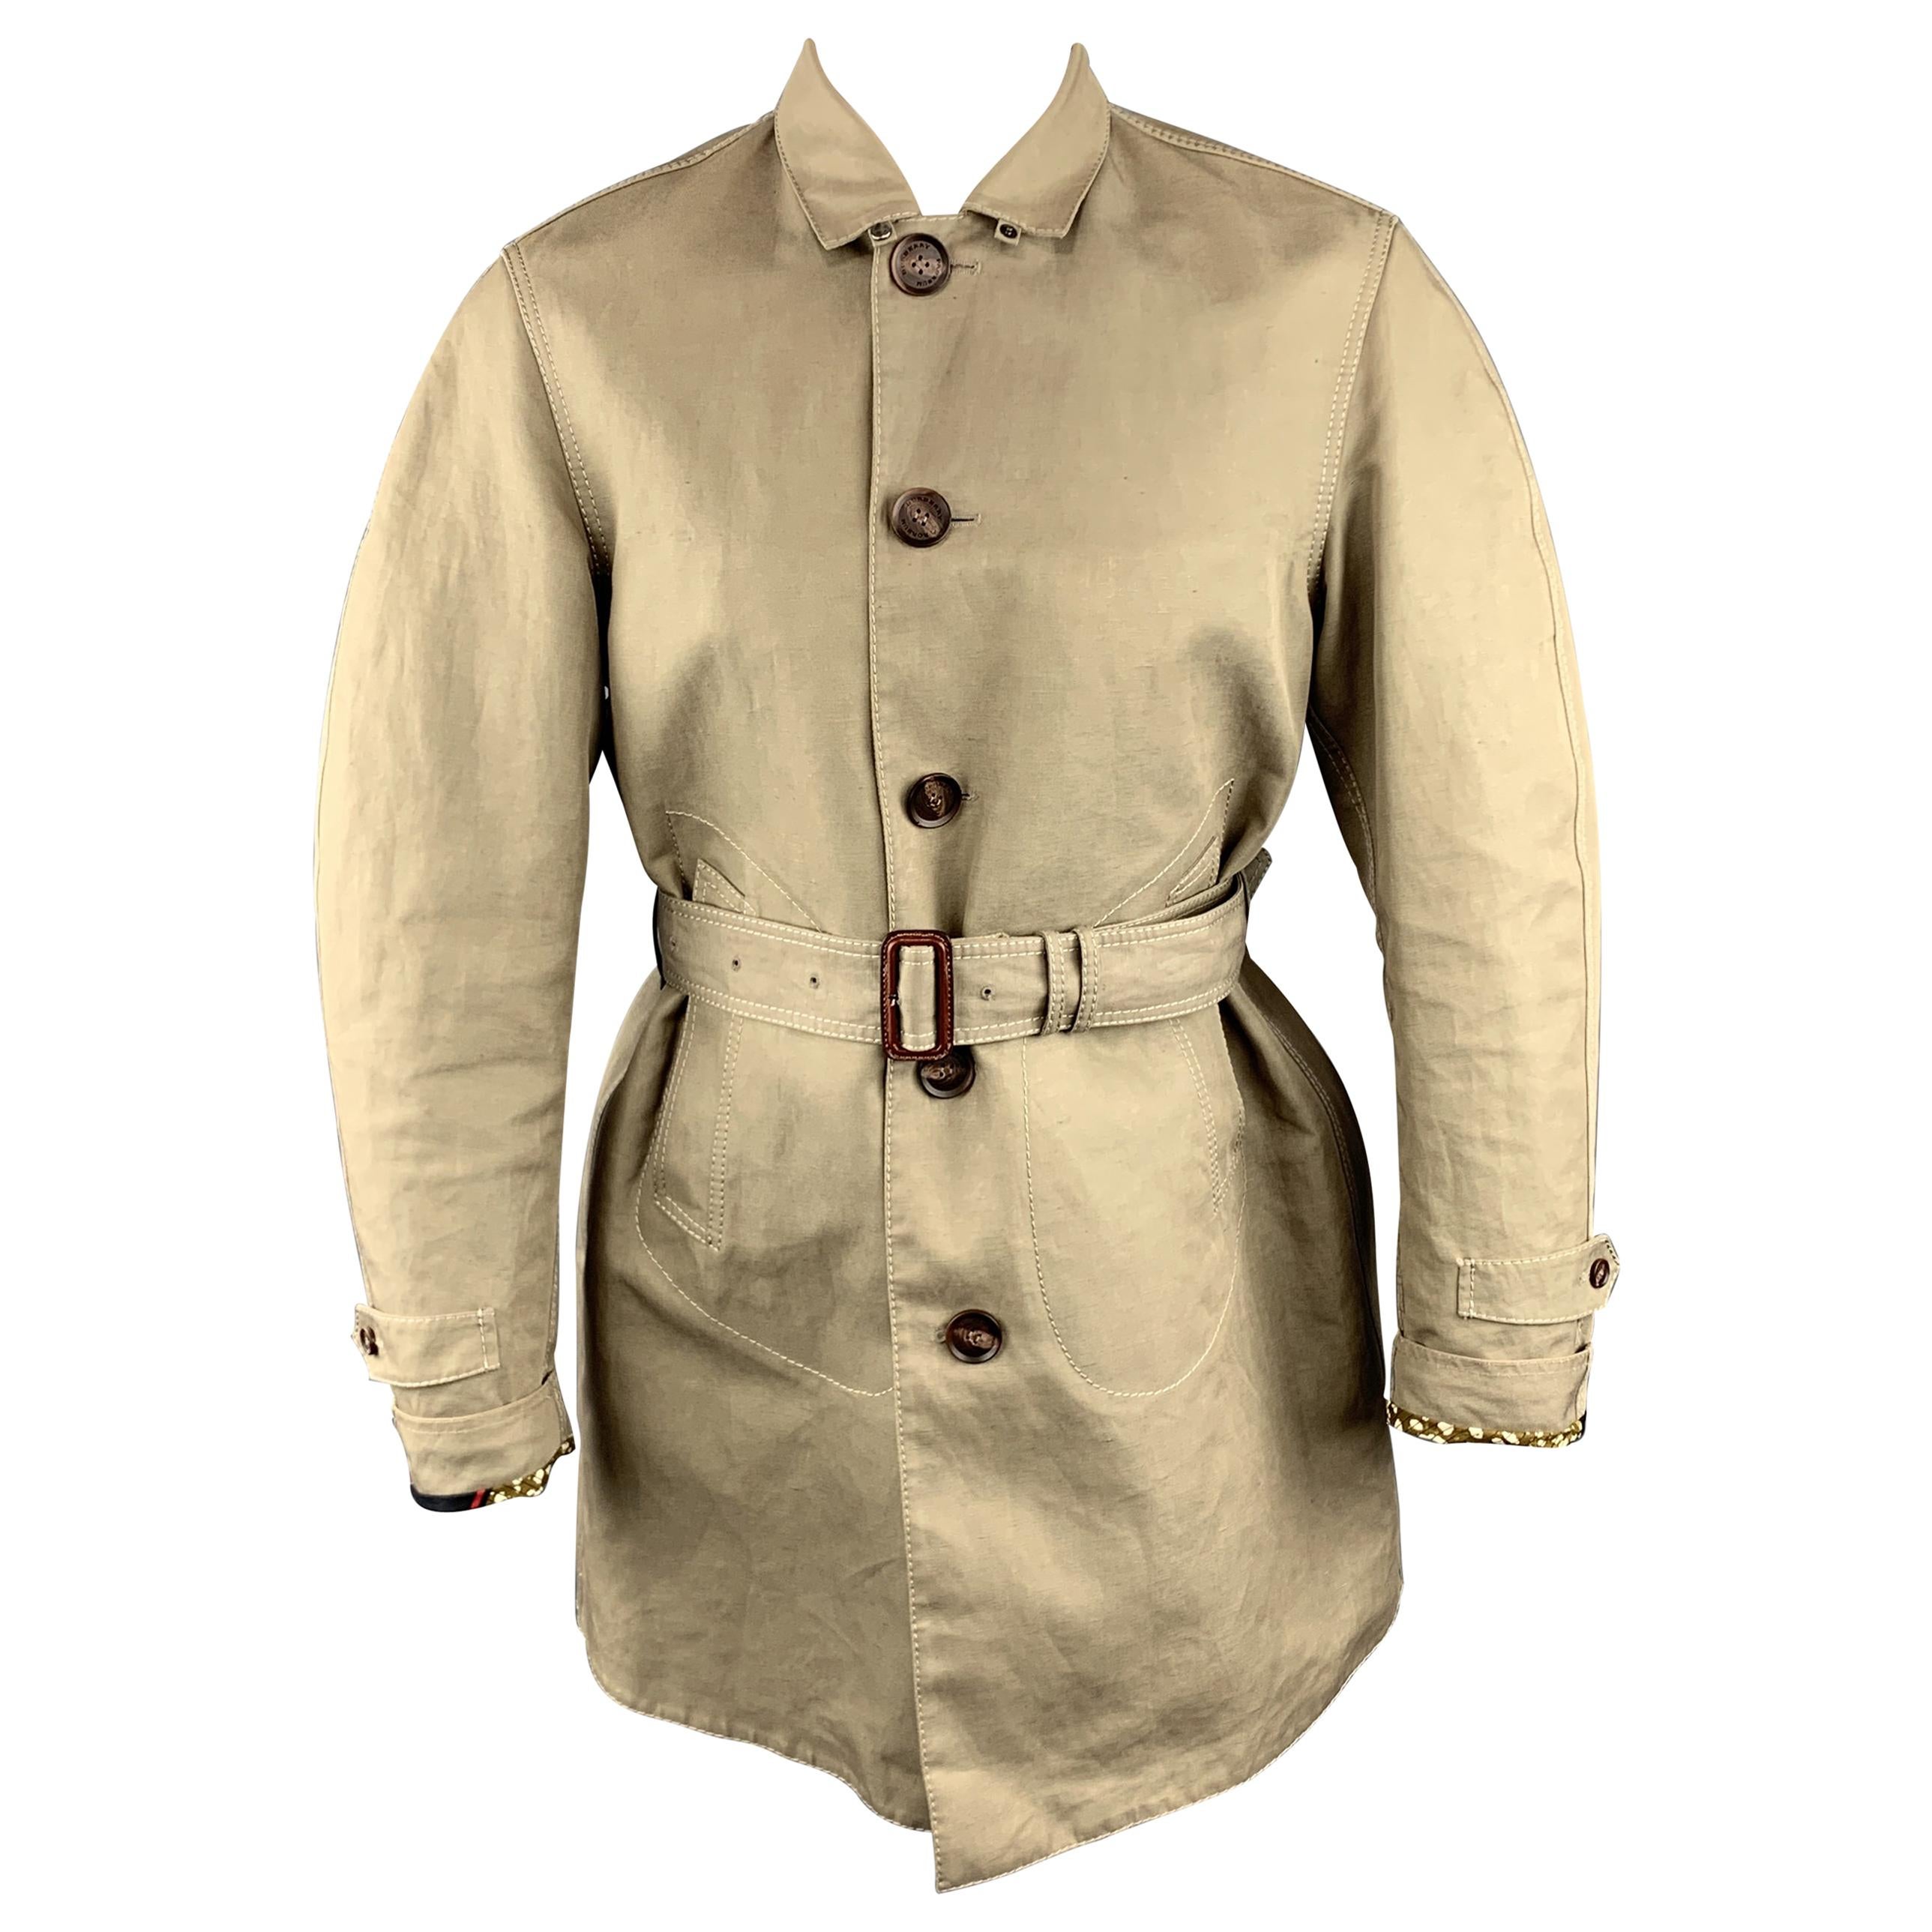 BURBERRY PRORSUM Size 36 Khaki Cotton / Linen Belted Trenchcoat $658.00